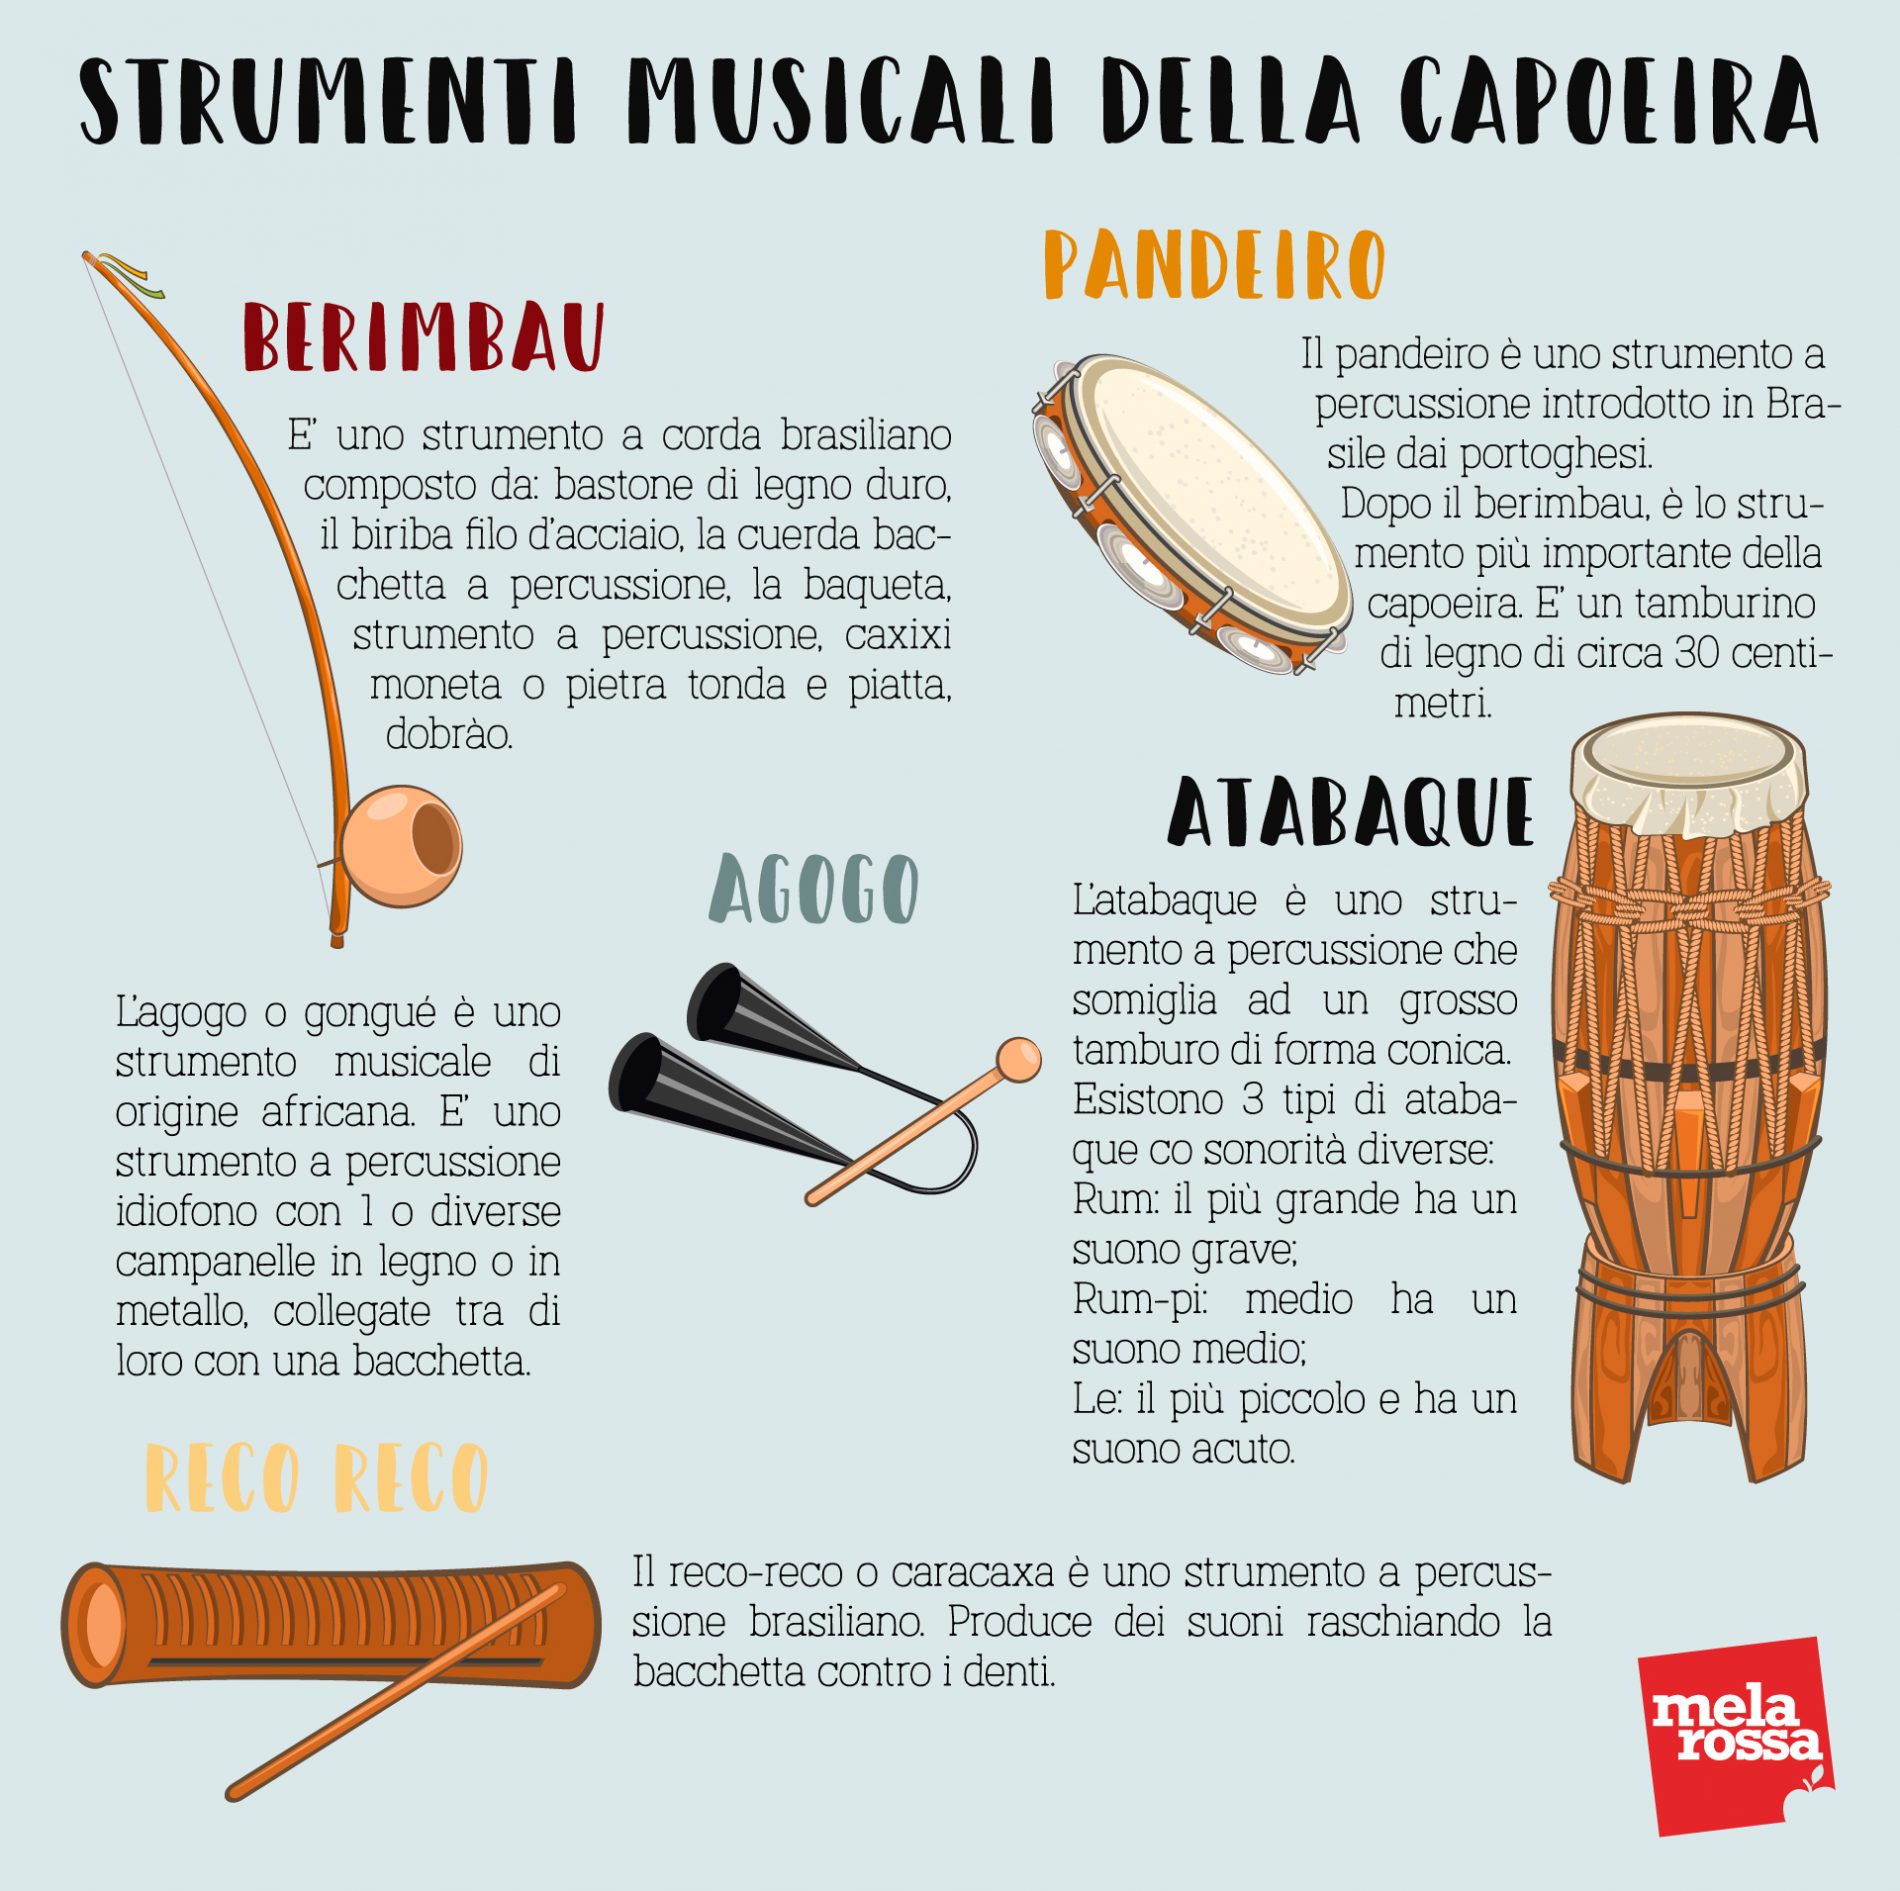 CApoeira: strumenti musicali